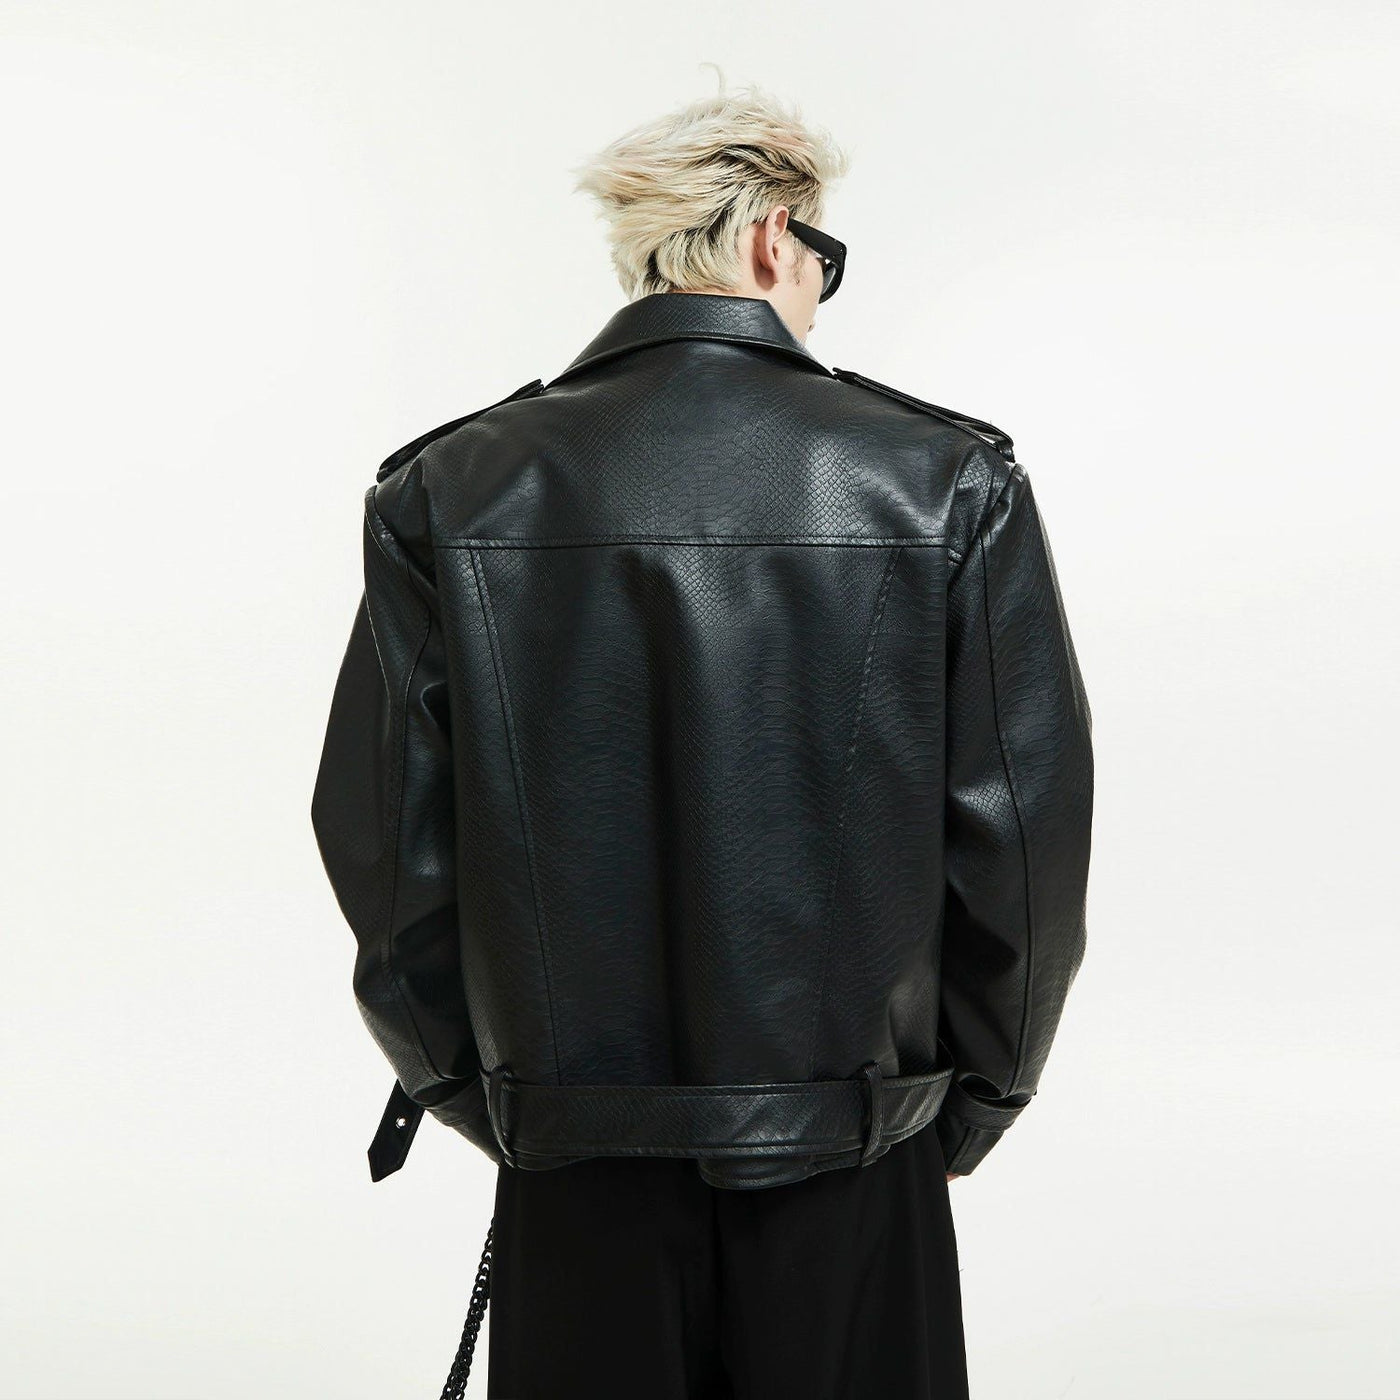 Textured Buckle Strap PU Leather Jacket Korean Street Fashion Jacket By Slim Black Shop Online at OH Vault